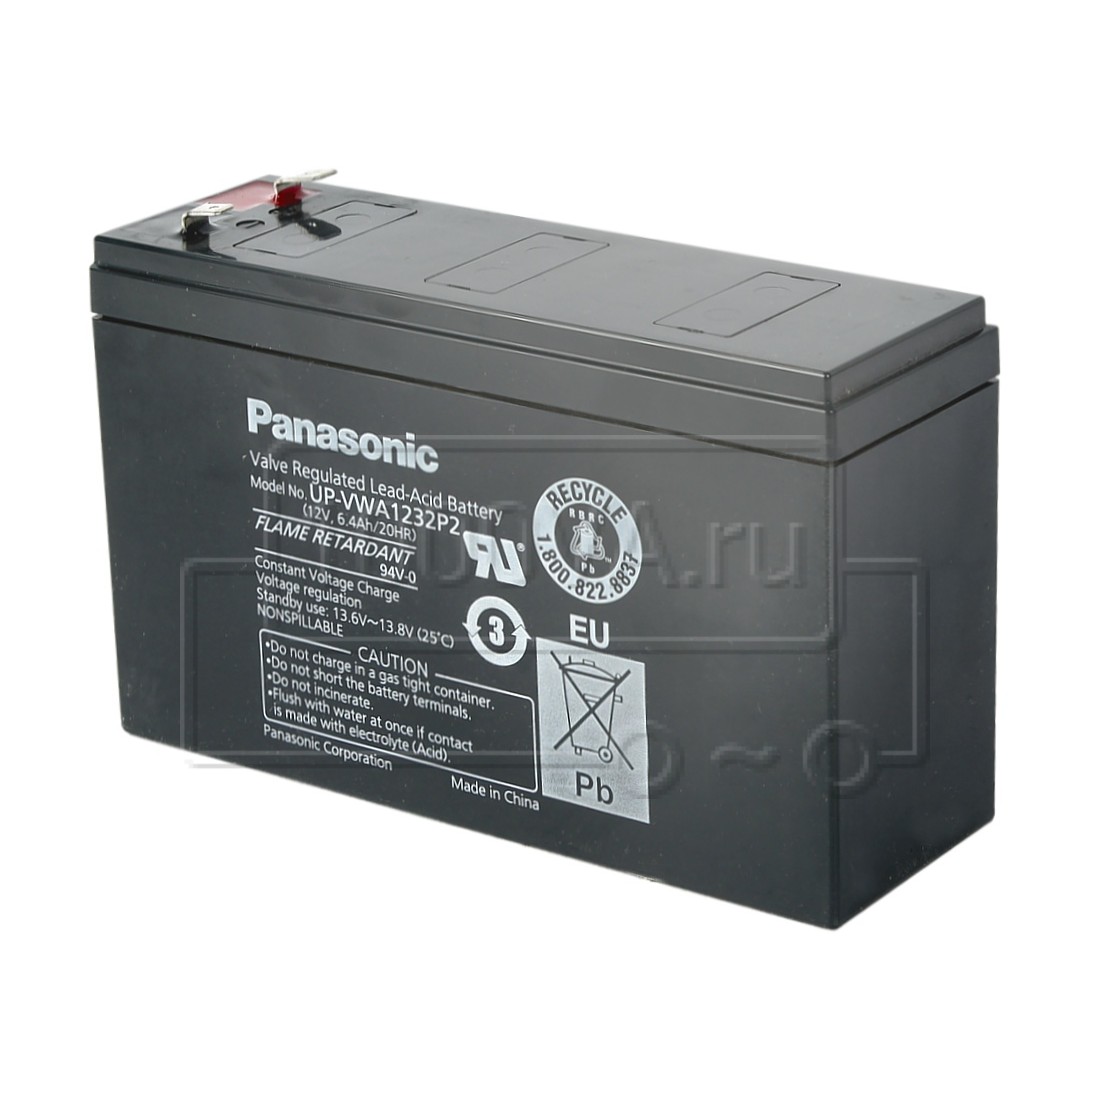 Panasonic UP-VWA1232P